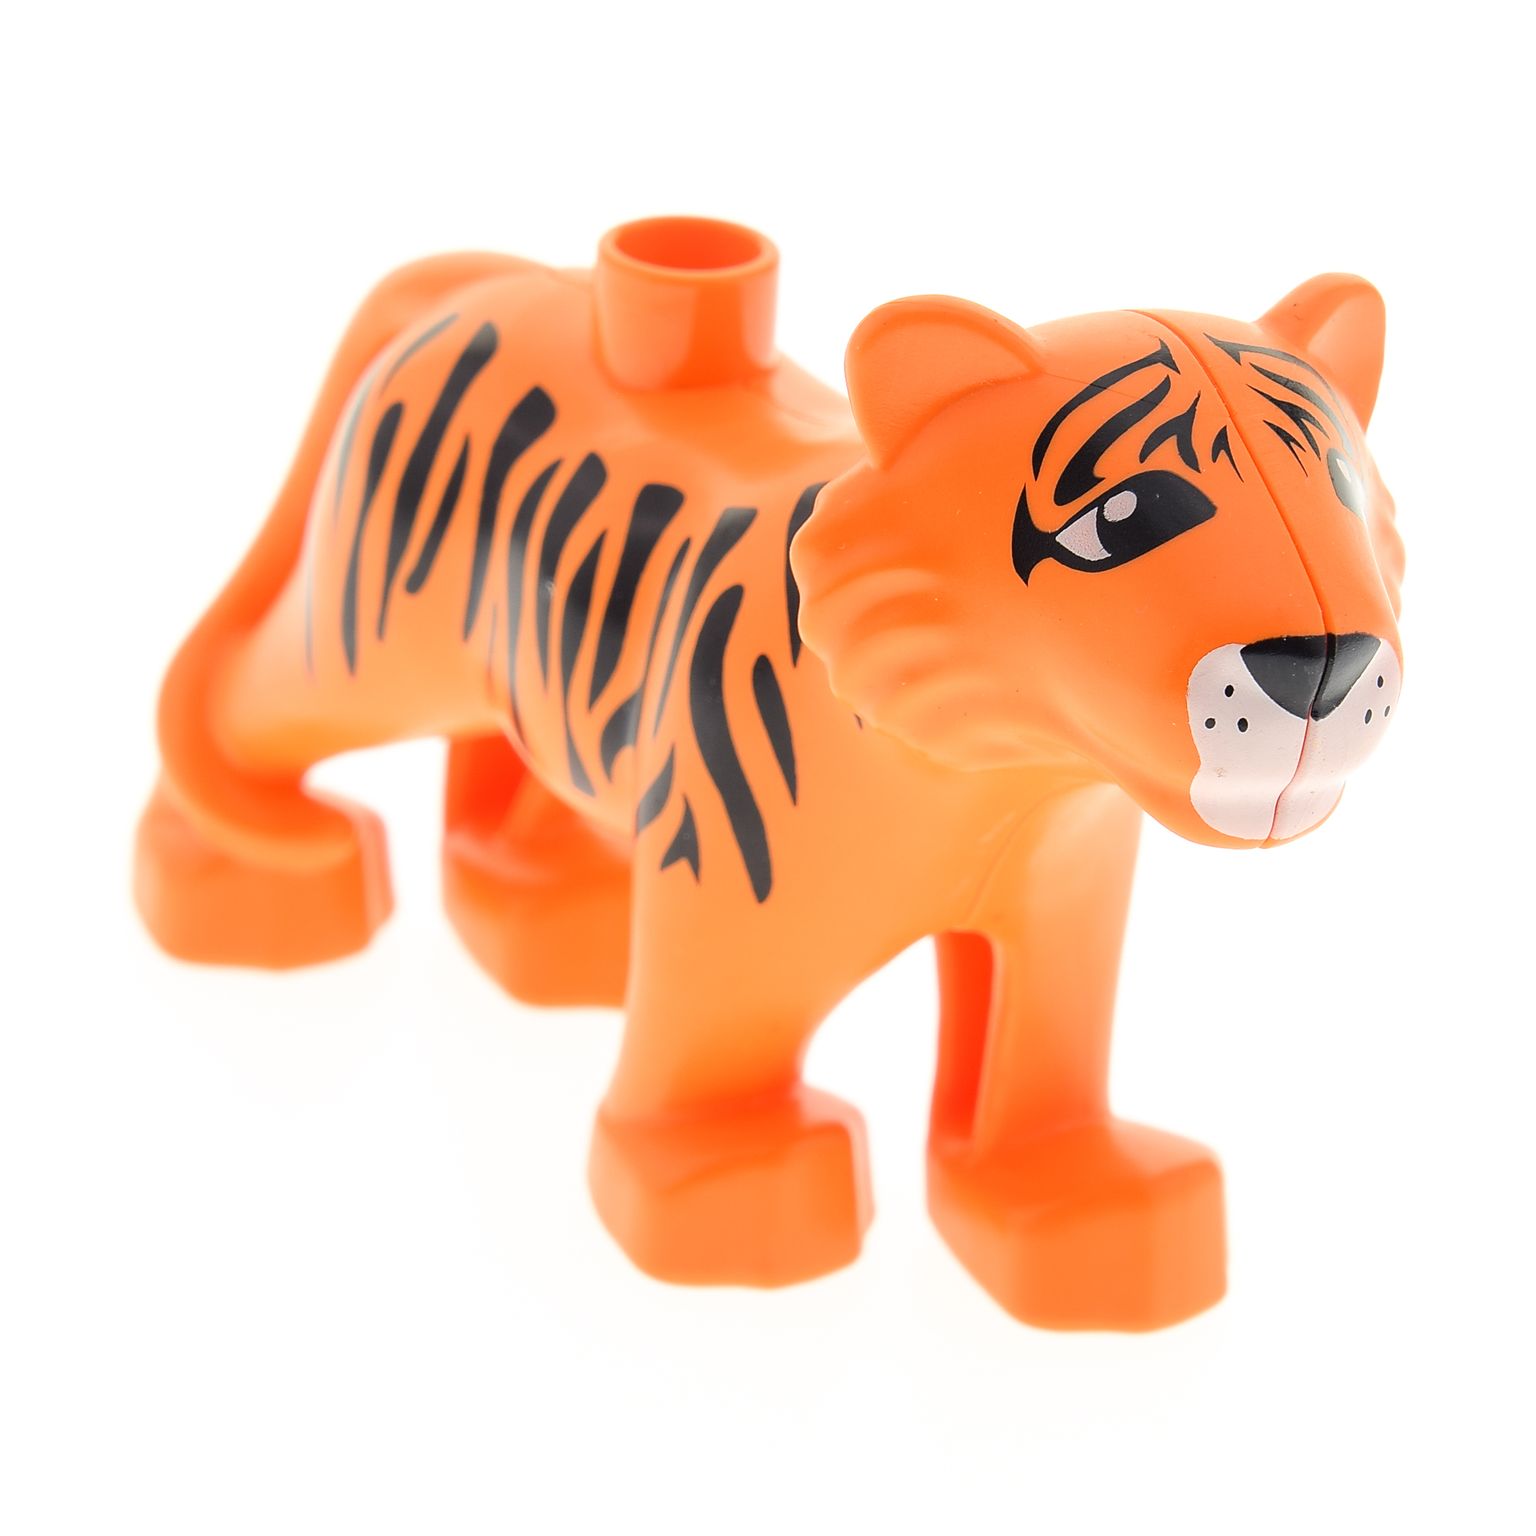 Tiger Zoo Zirkus Safari auf grüner Platte Tier Lego Duplo 